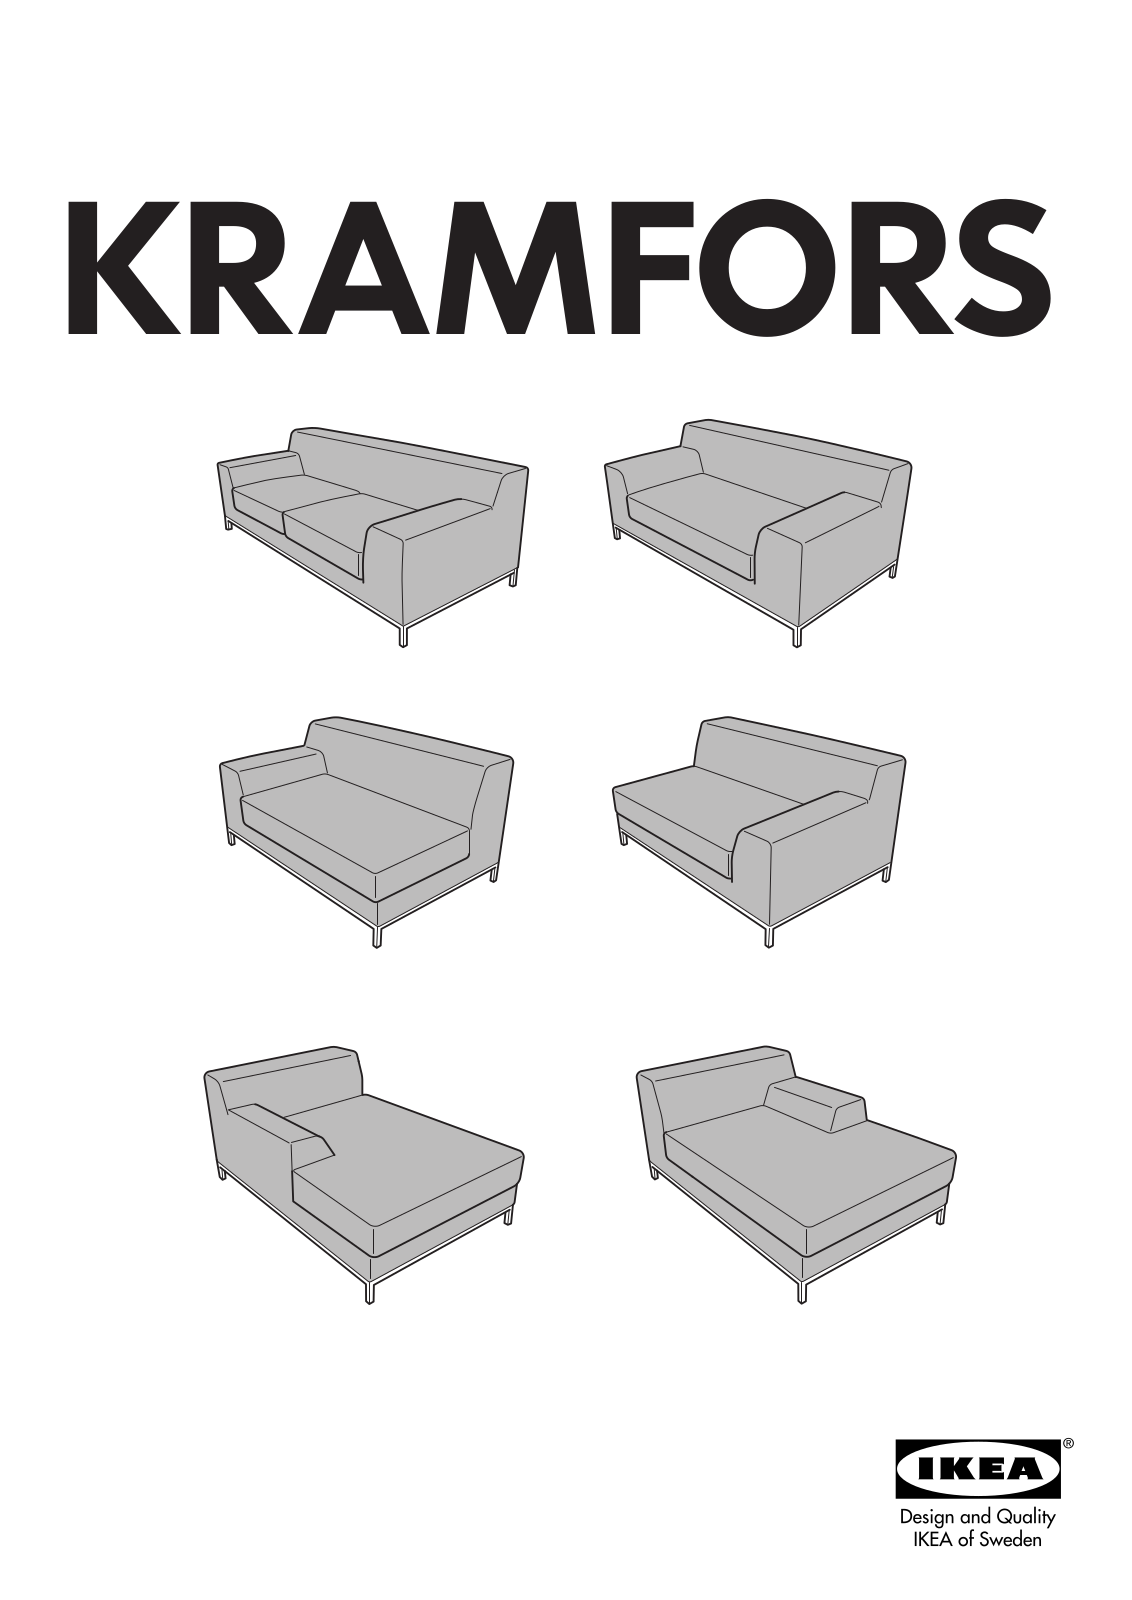 IKEA KRAMFORS SOFA COVER, KRAMFORS RIGHT CHAISE LOUNGE COVER, KRAMFORS LEFT-HAND CHAISE COVER, KRAMFORS LOVESEAT COVER, KRAMFORS LOVESEAT COVER W-1 ARM RIGHT Assembly Instruction